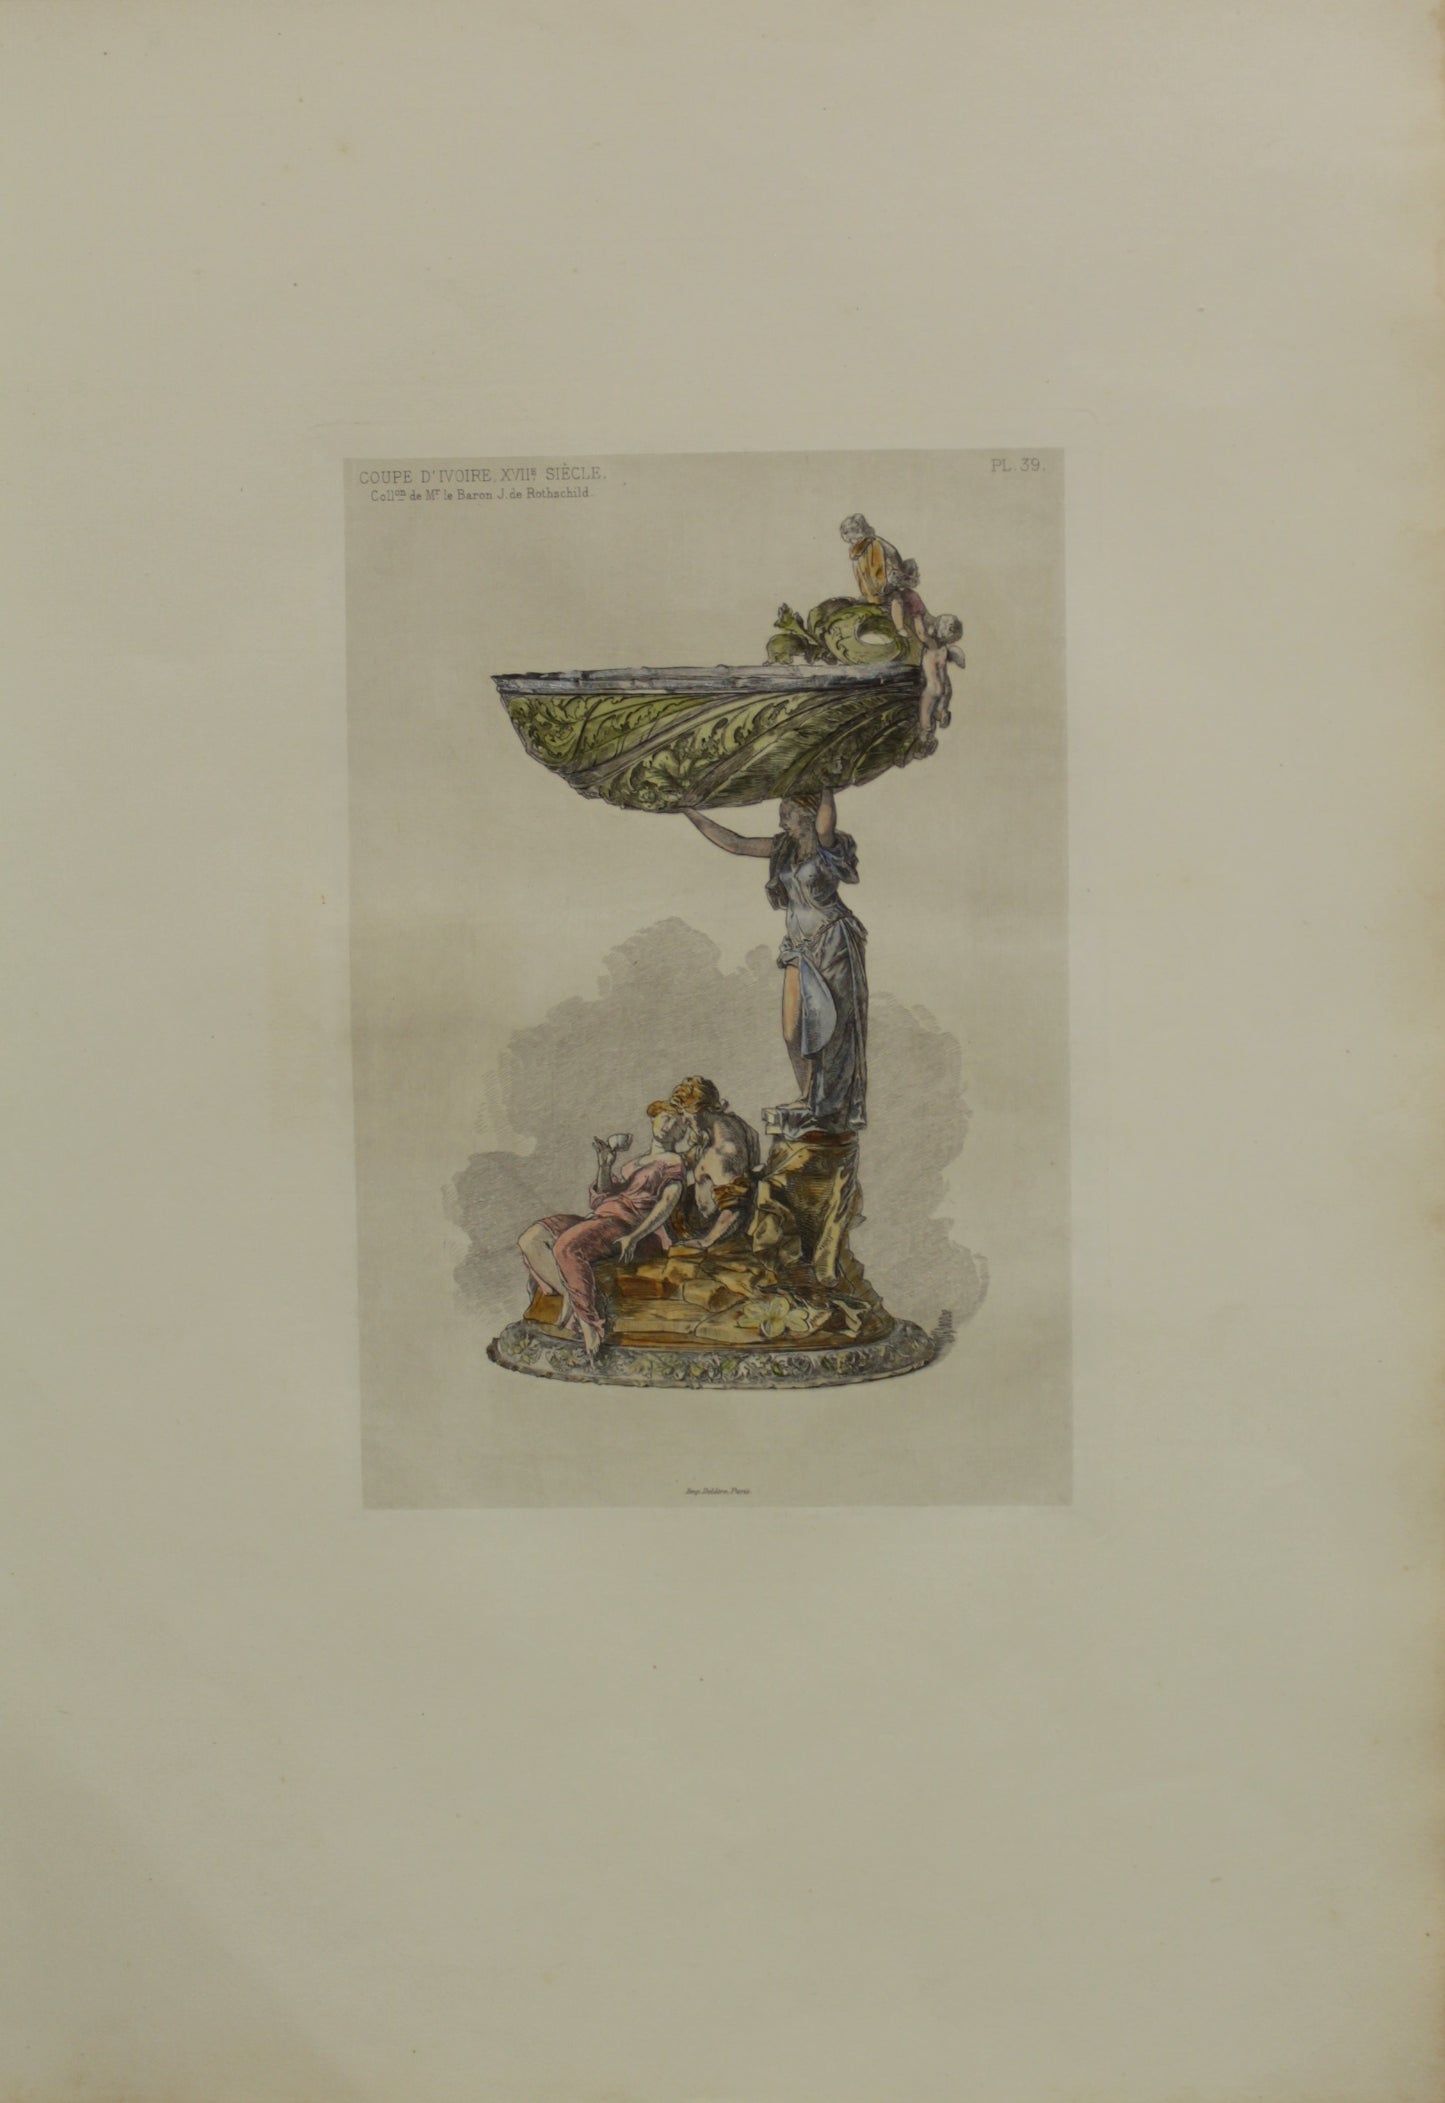 Decorator, Les Collections, Celebres, D'Oeuvres D'Art, Coupe D' Ivoire, XVII, Siecle, From the Collection De M le Baron J de Rothschild, Plate 39, 1864